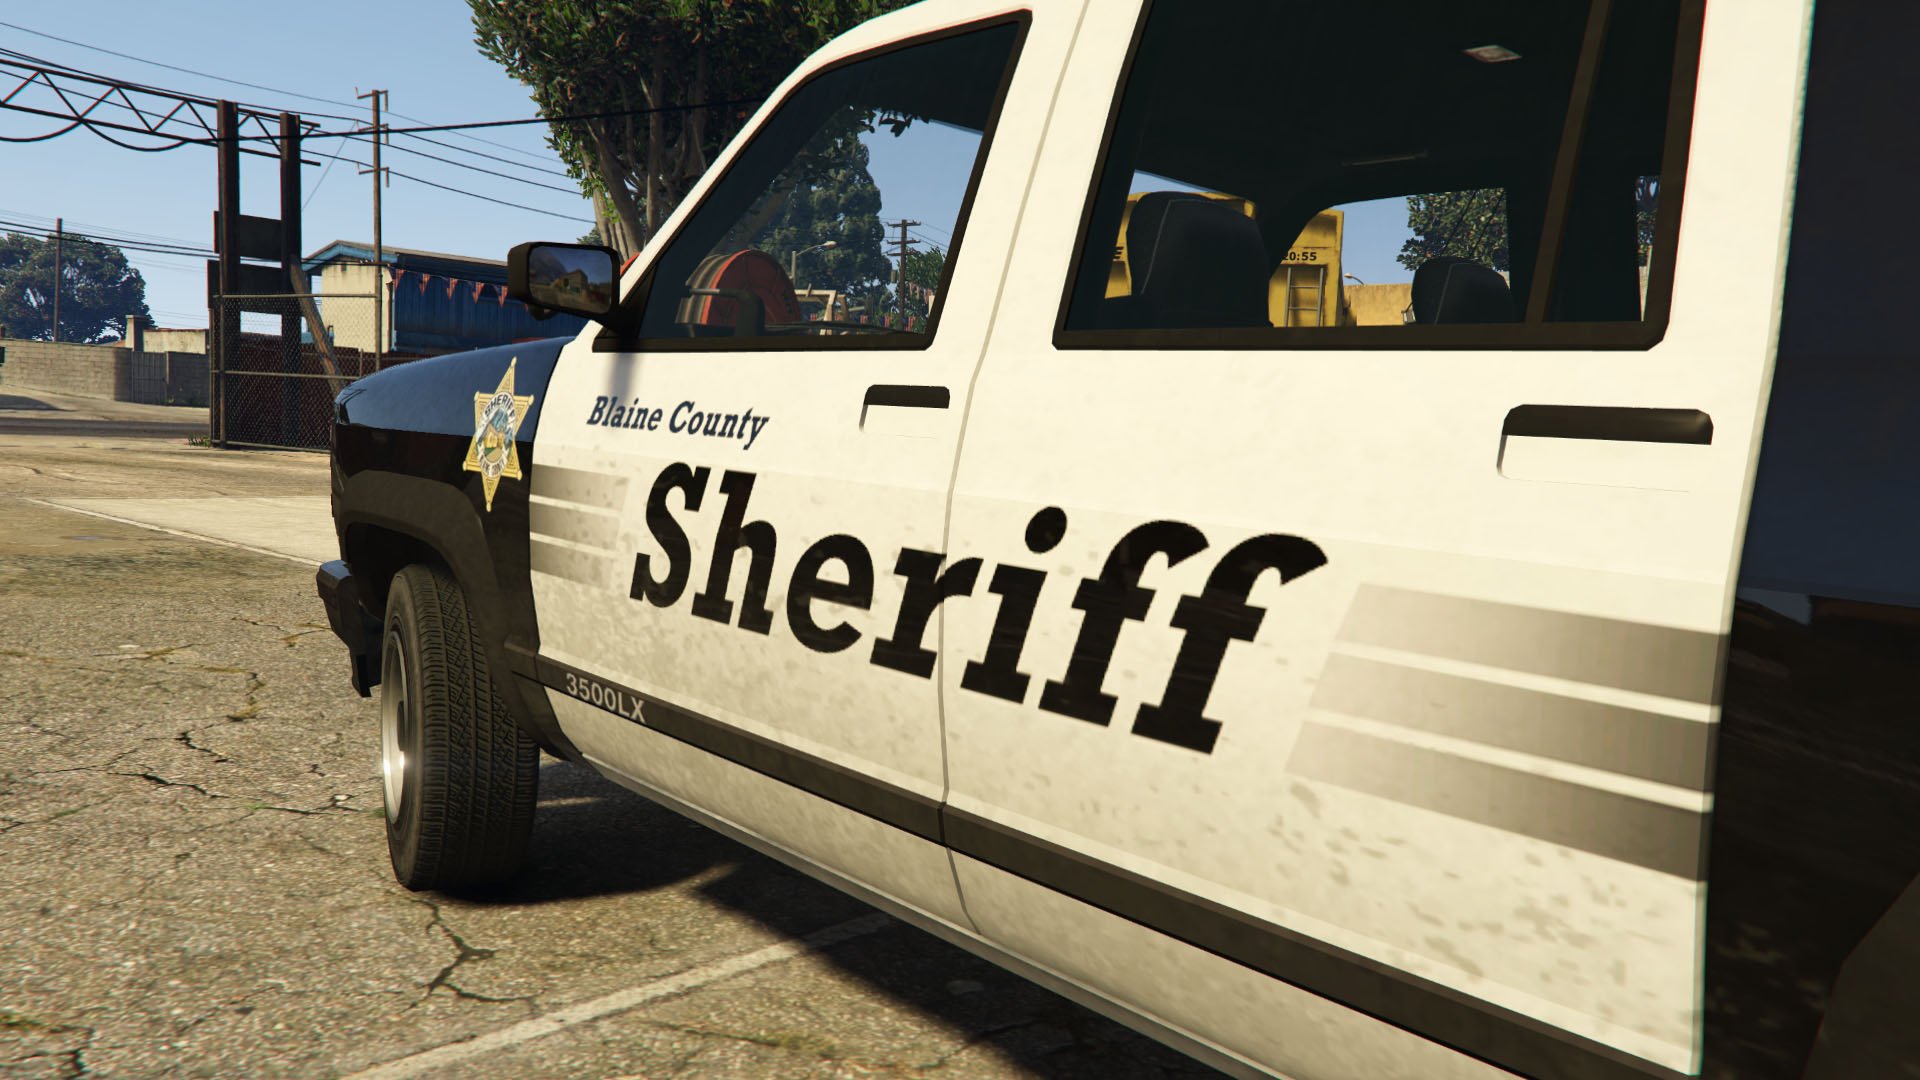 Gta 5 blaine county sheriff фото 29